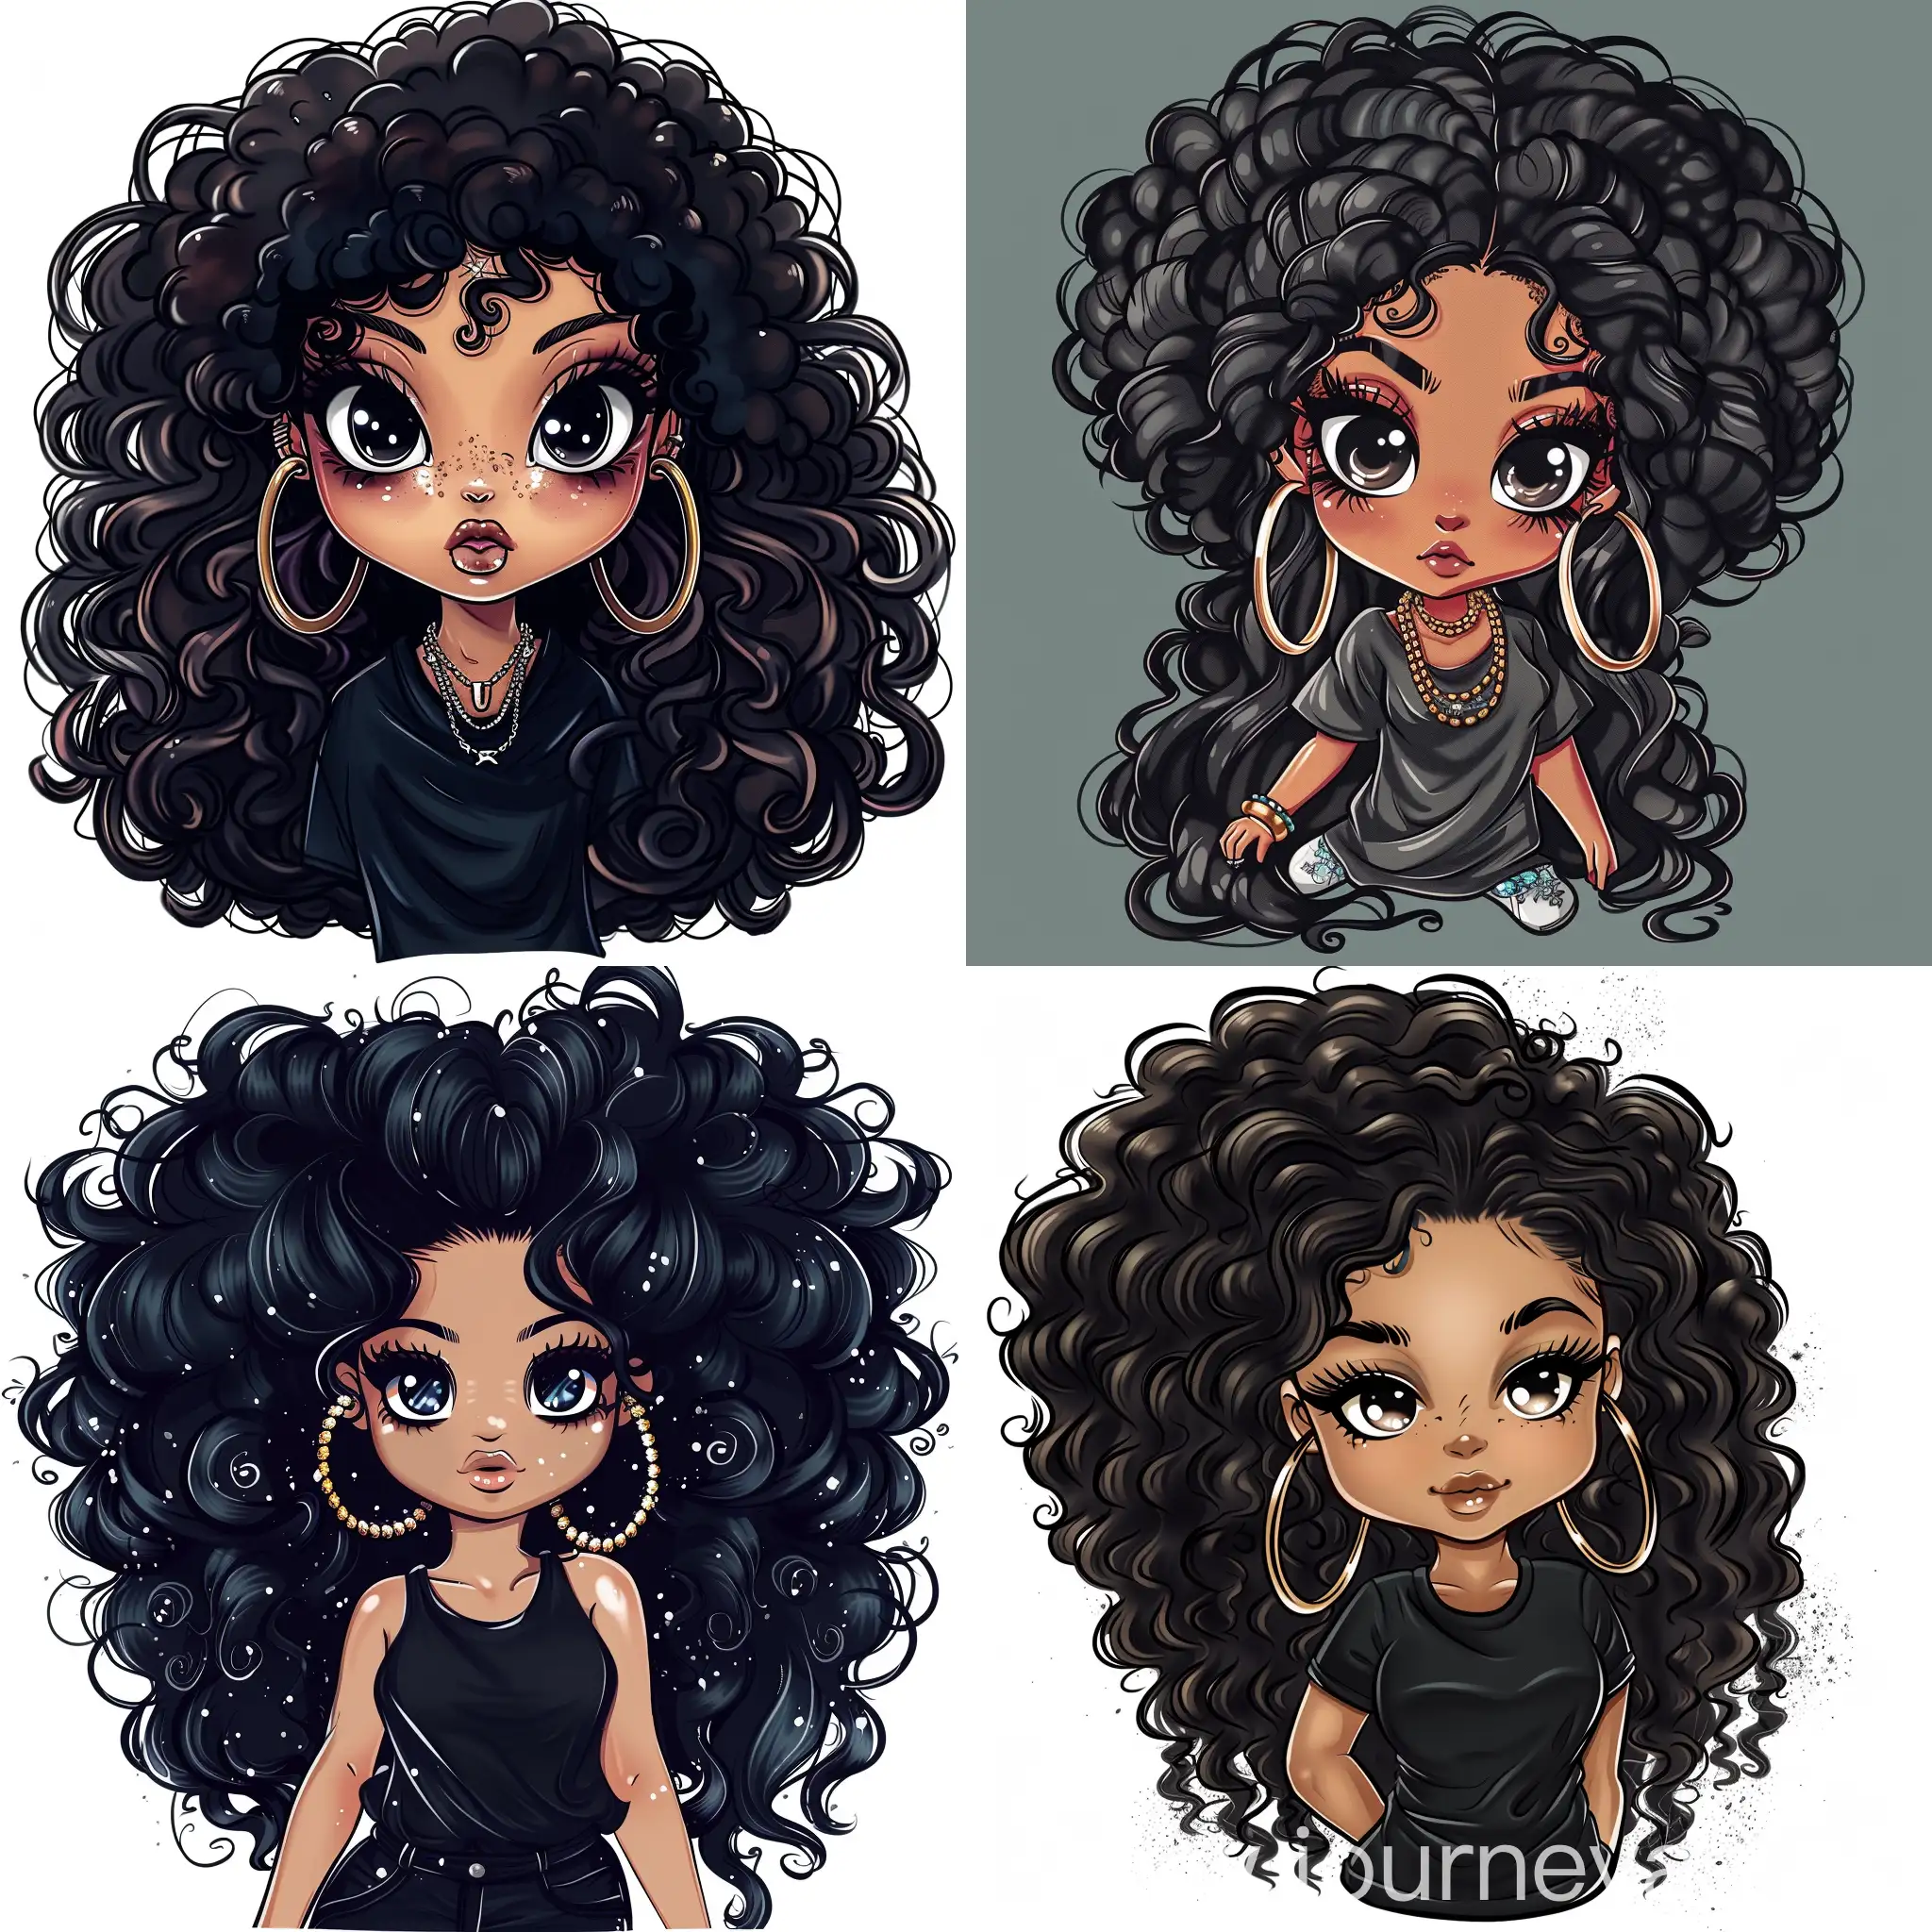 Chibi-Boho-Black-Girl-with-Afro-Hair-and-Hoop-Earrings-TShirt-Design